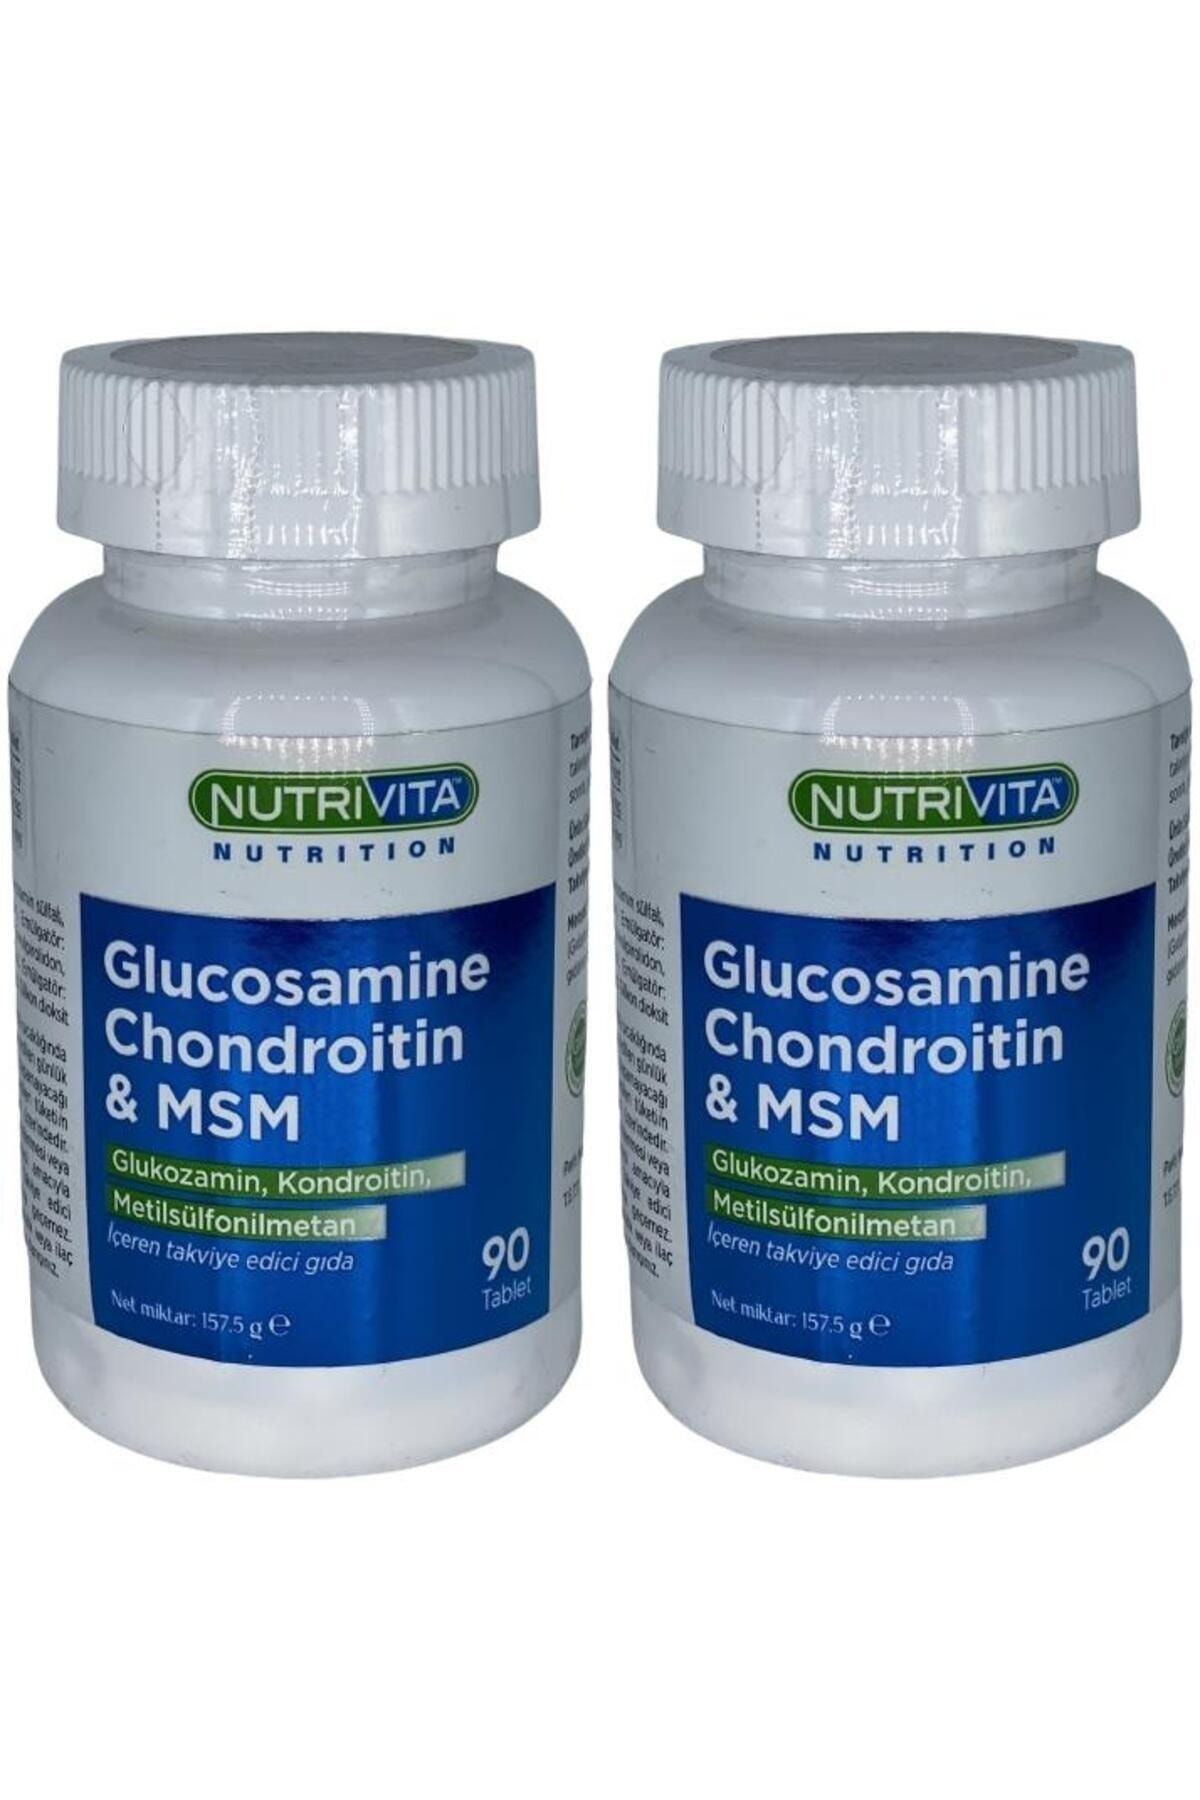 Nutrivita Nutrition Glucosamine Chondroitin Msm 2x90 Tablet Glukozamin Kondroitin